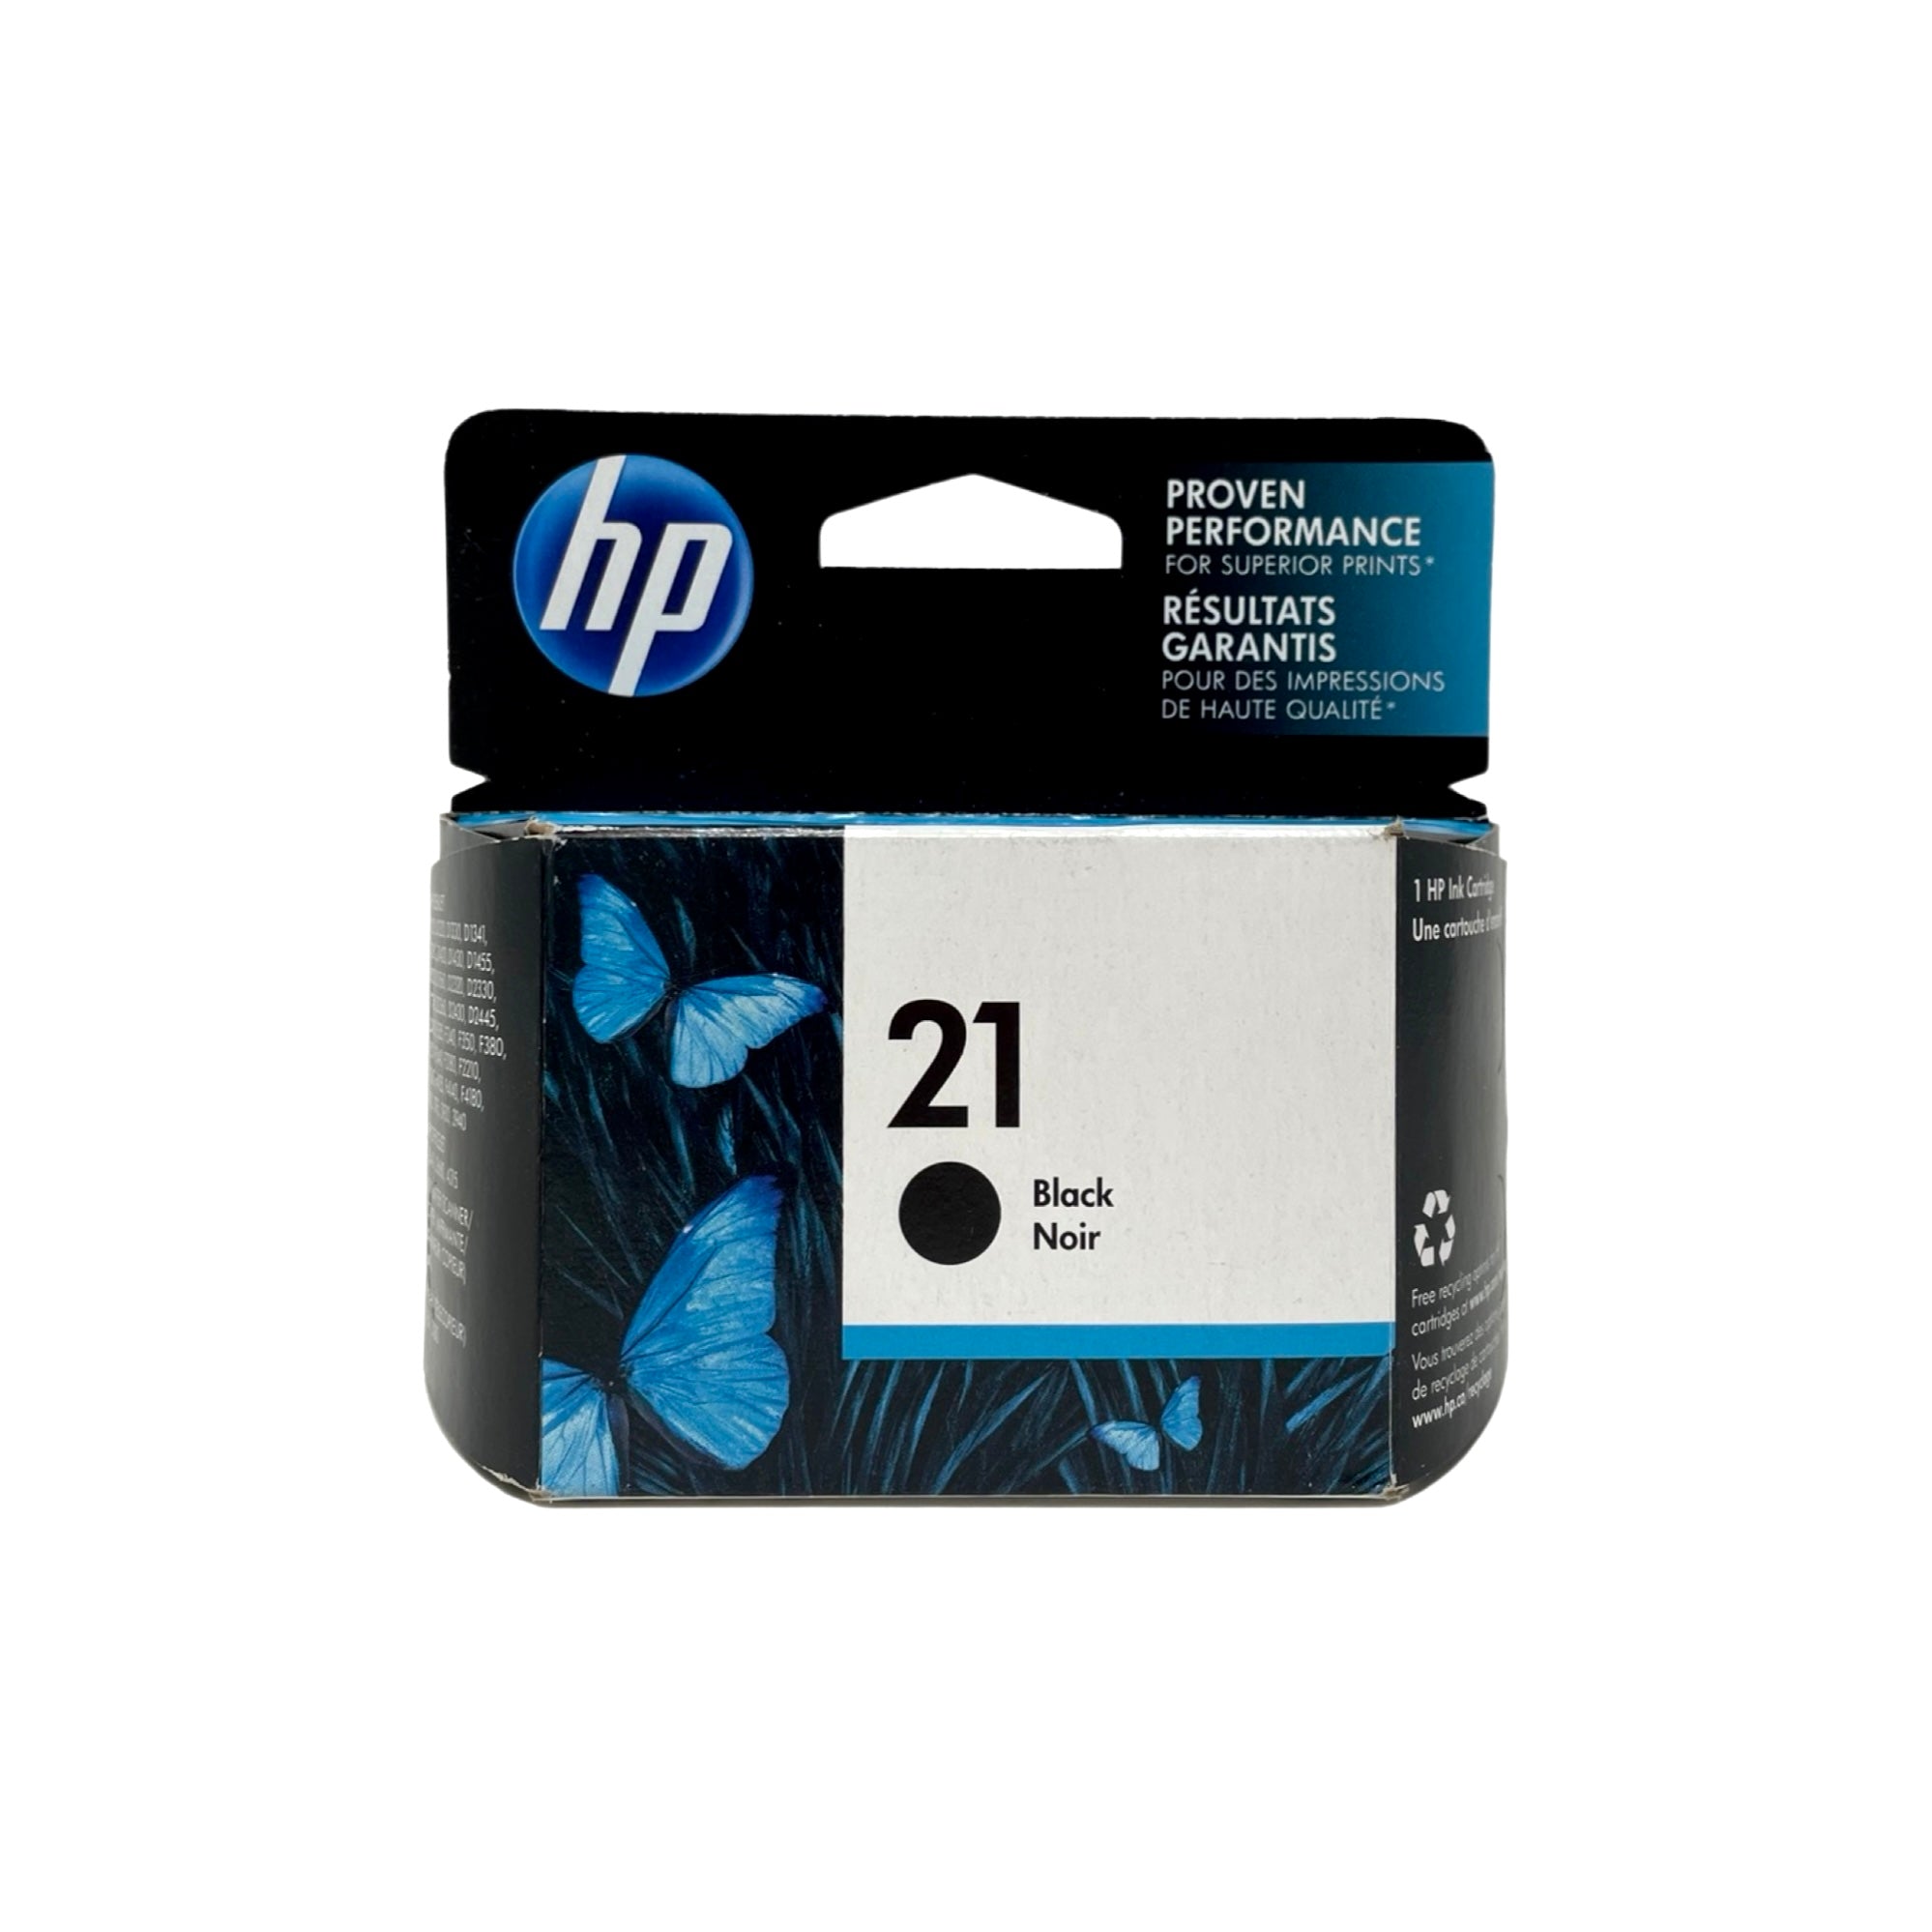 Genuine HP 21 Black Ink Cartridge, Standard Yield (C9351AN